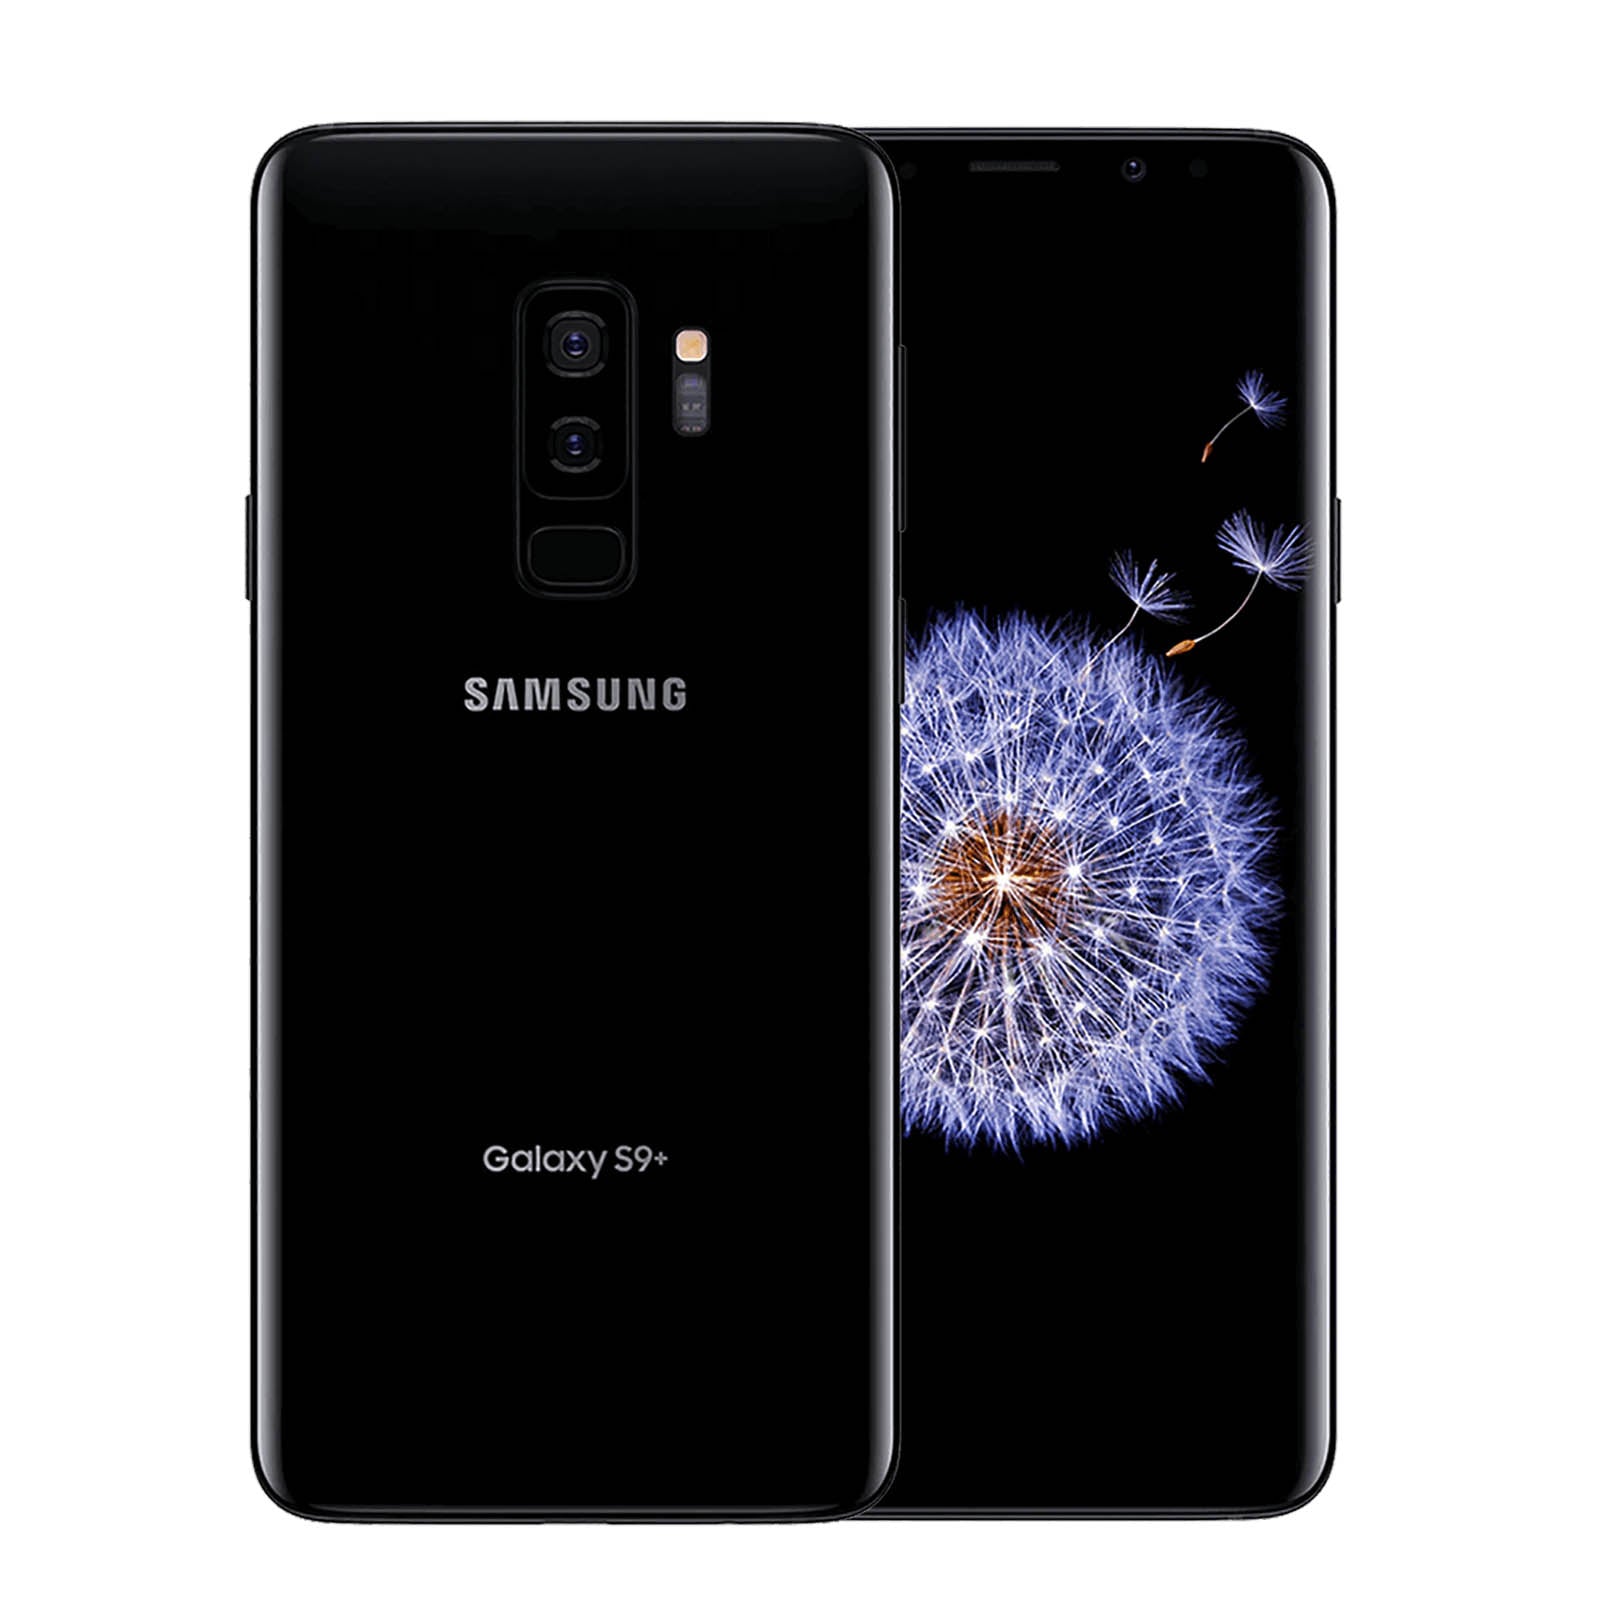 Samsung Galaxy S9 Plus 256GB Black Very good - Unlocked